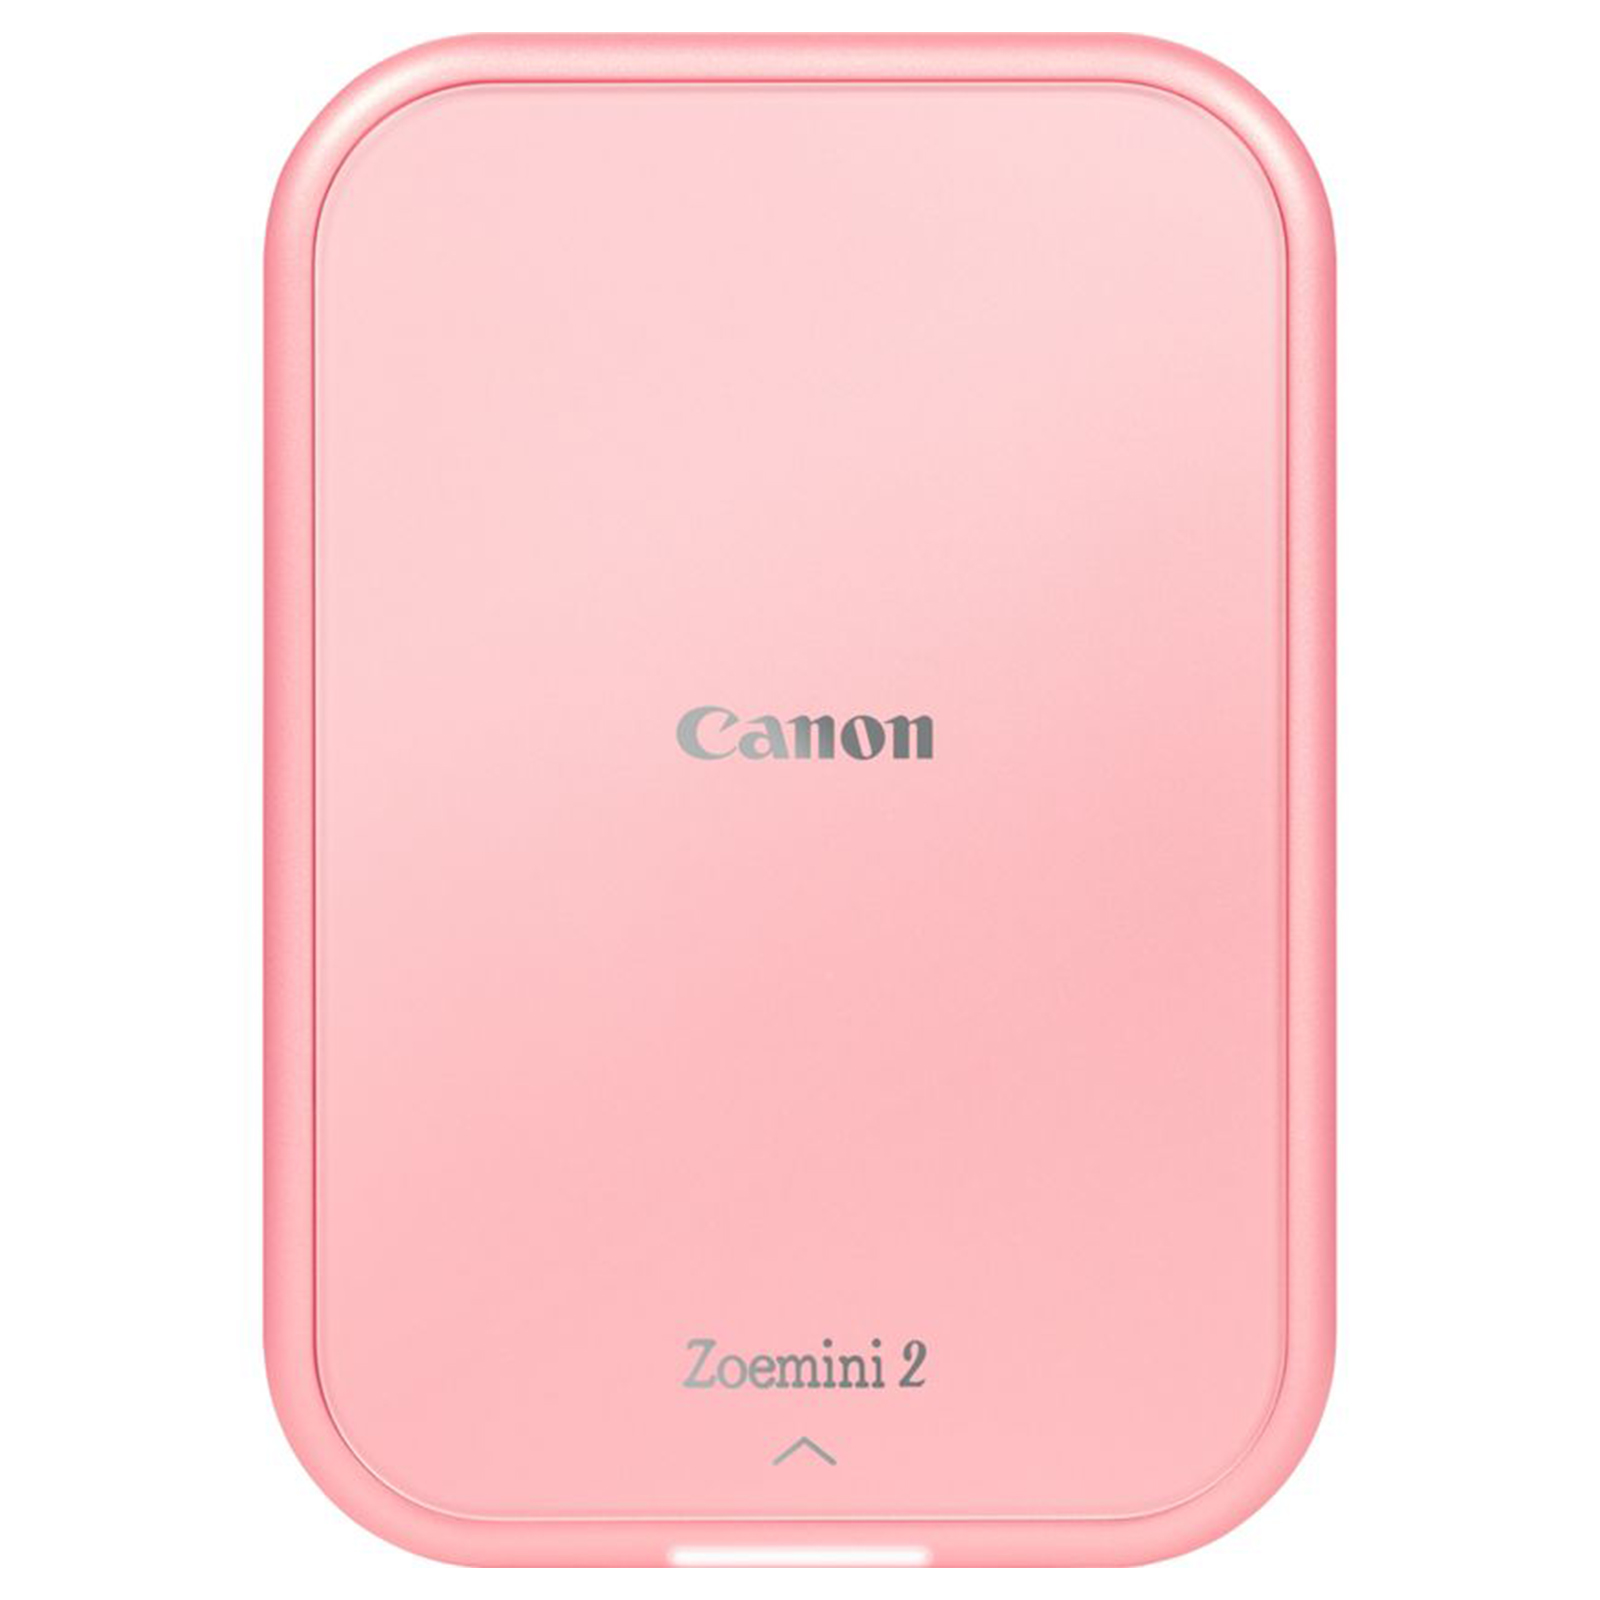 Canon Zoemini 2 Portable Colour Photo Printer - Rose Gold